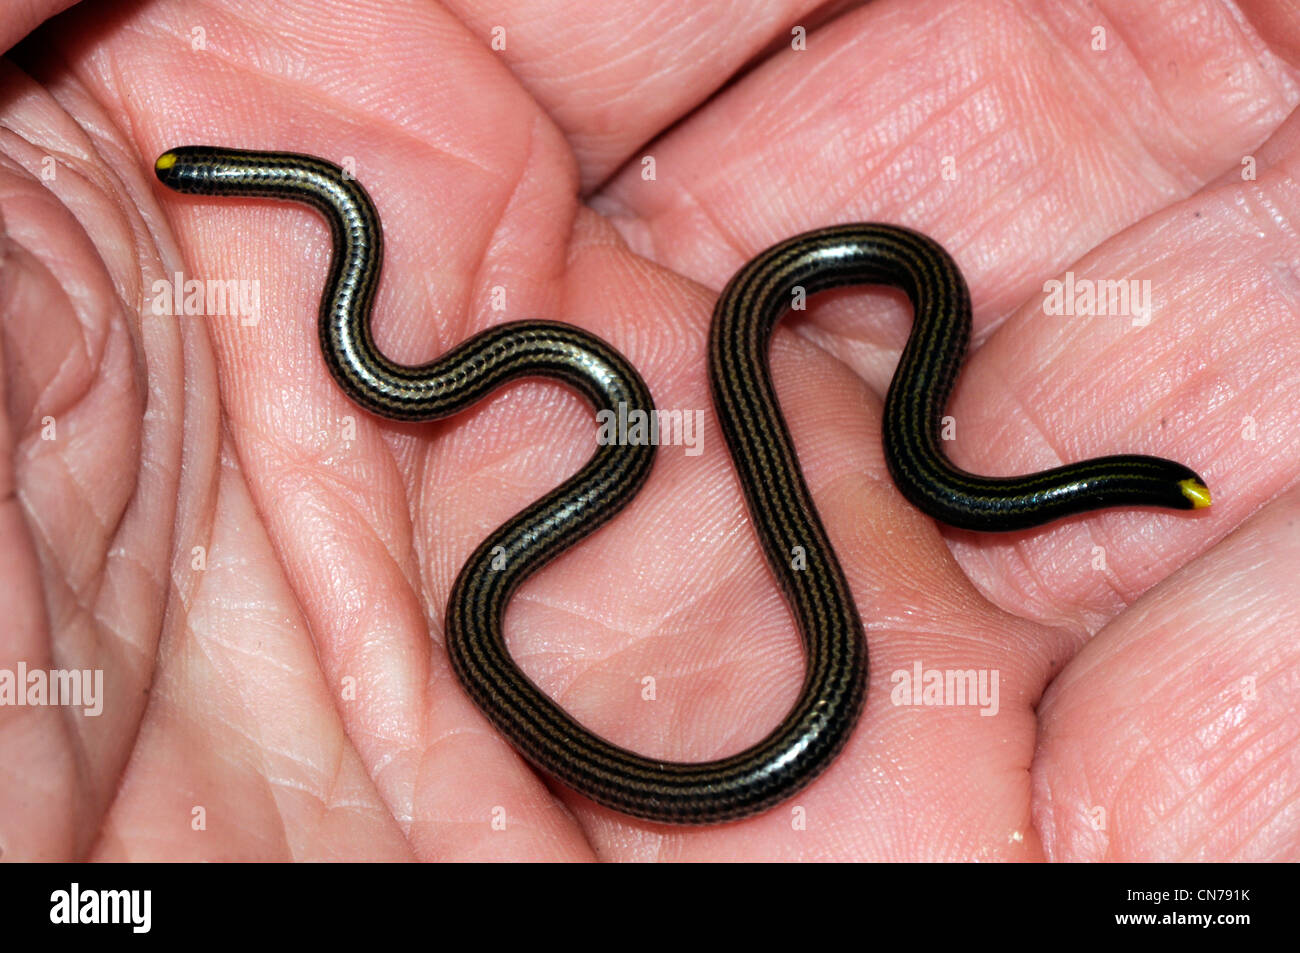 Leptotyphlops goudotii, or the black blind snake Stock Photo